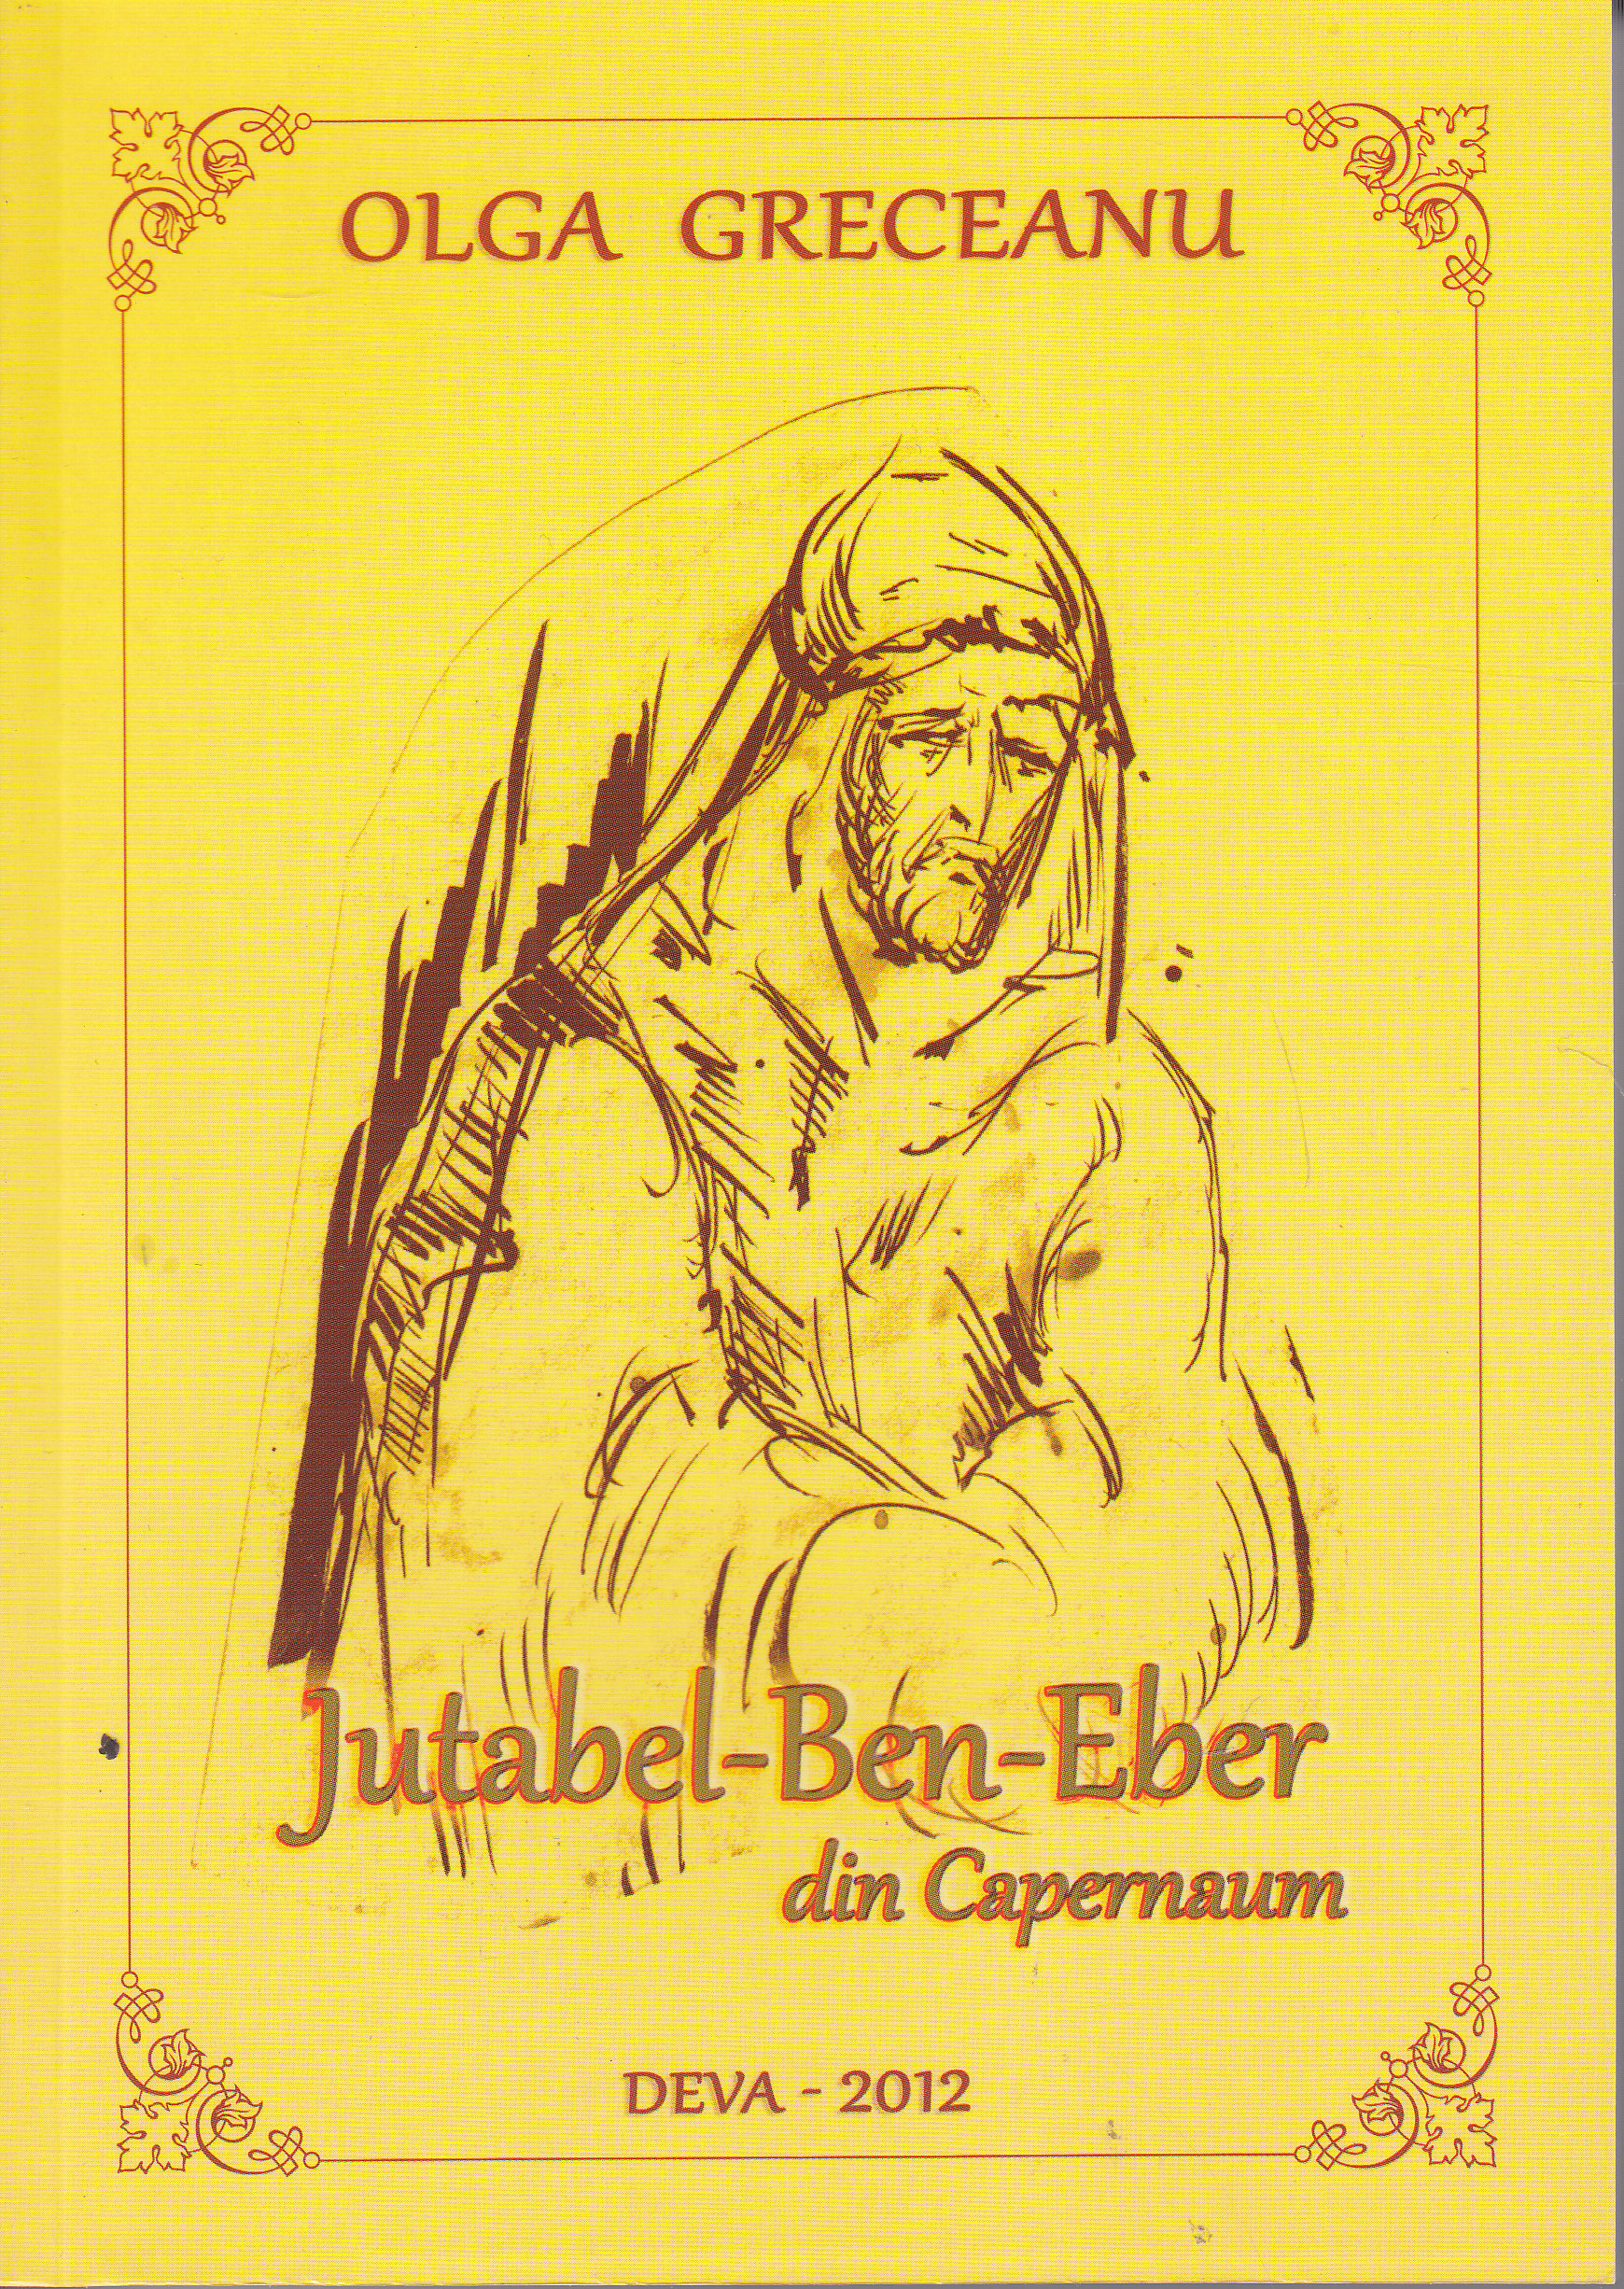 Jutabel-Ben-Eber din Capernaum - Olga Greceanu